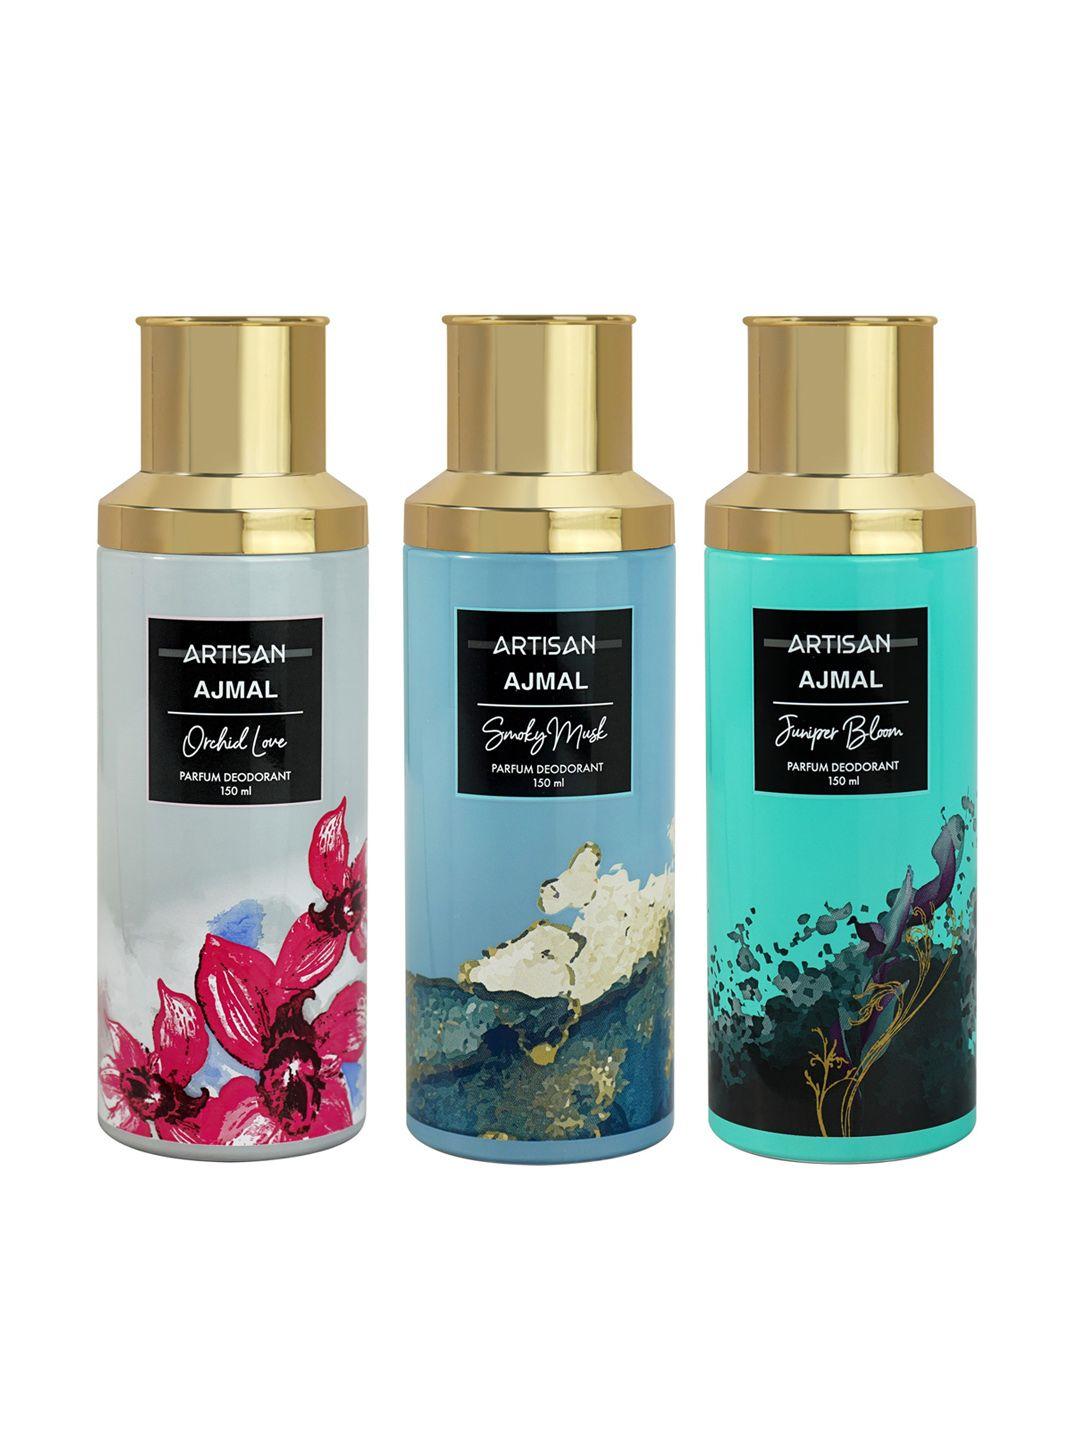 ajmal set of 3 artisan deodorants - smoky musk + juniper bloom + orchid love - 150ml each